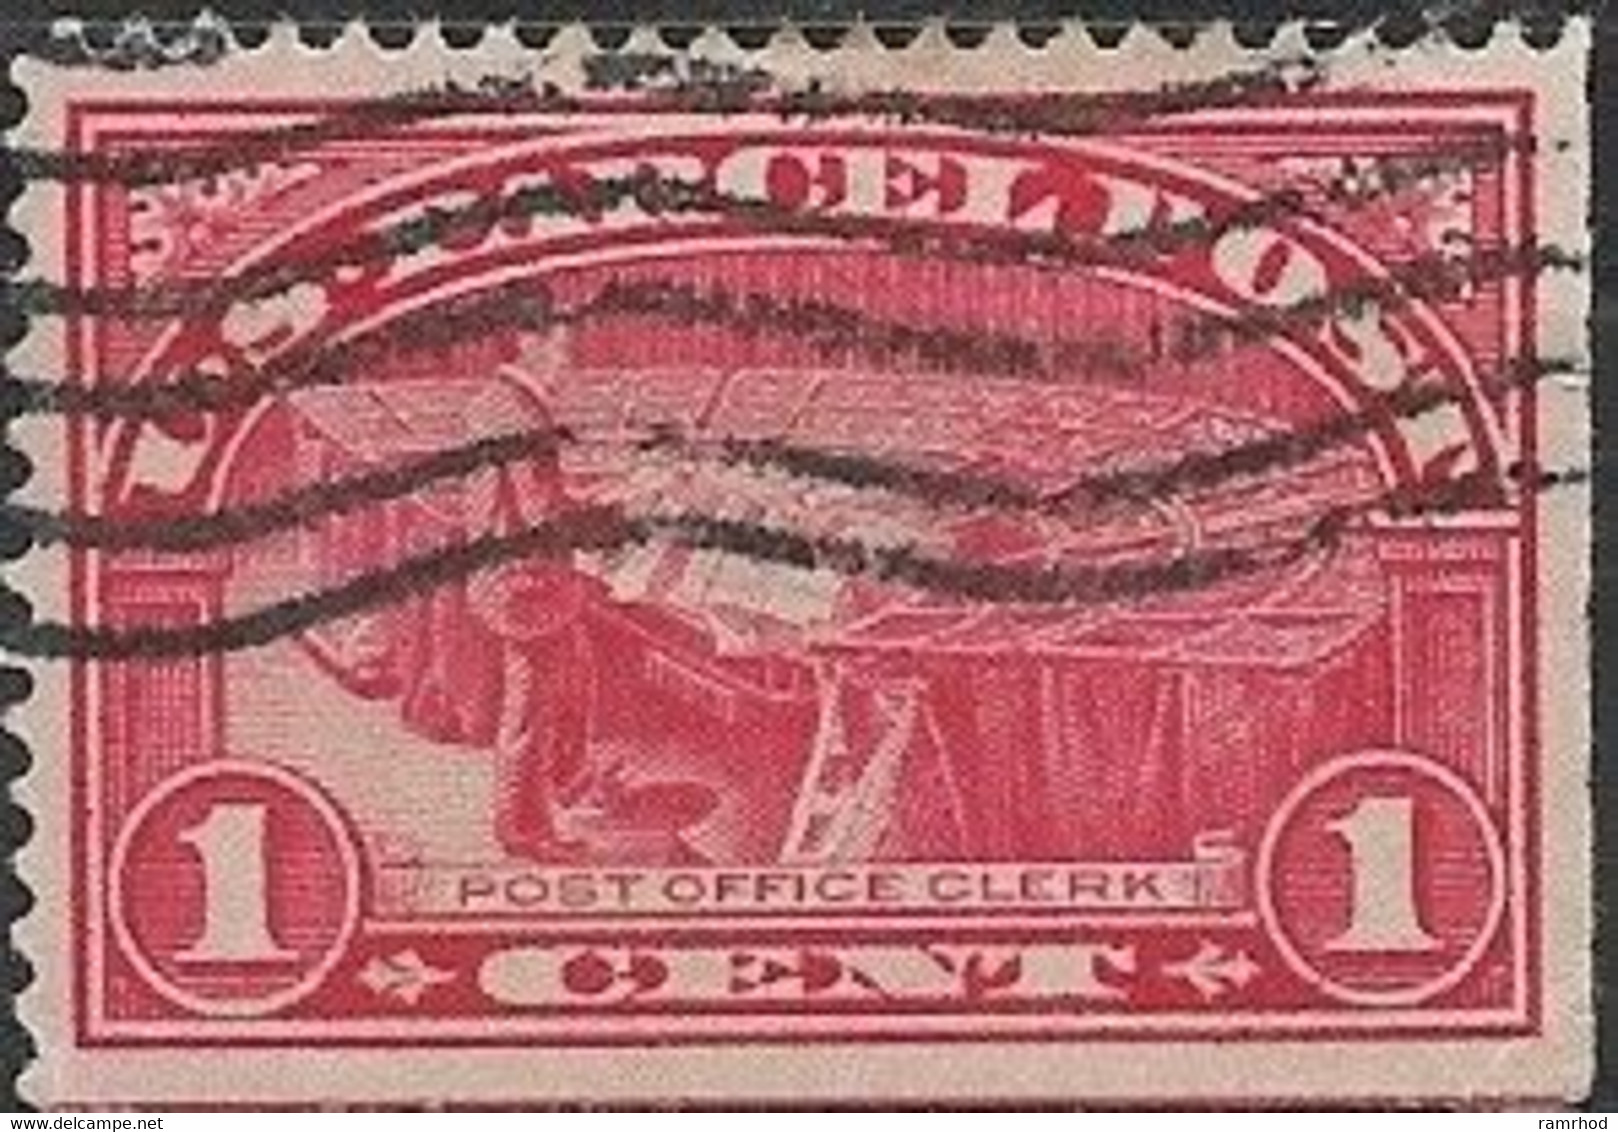 USA 1912 Parcel Post - Post Office Clerk - 1c. - Red FU - Paketmarken